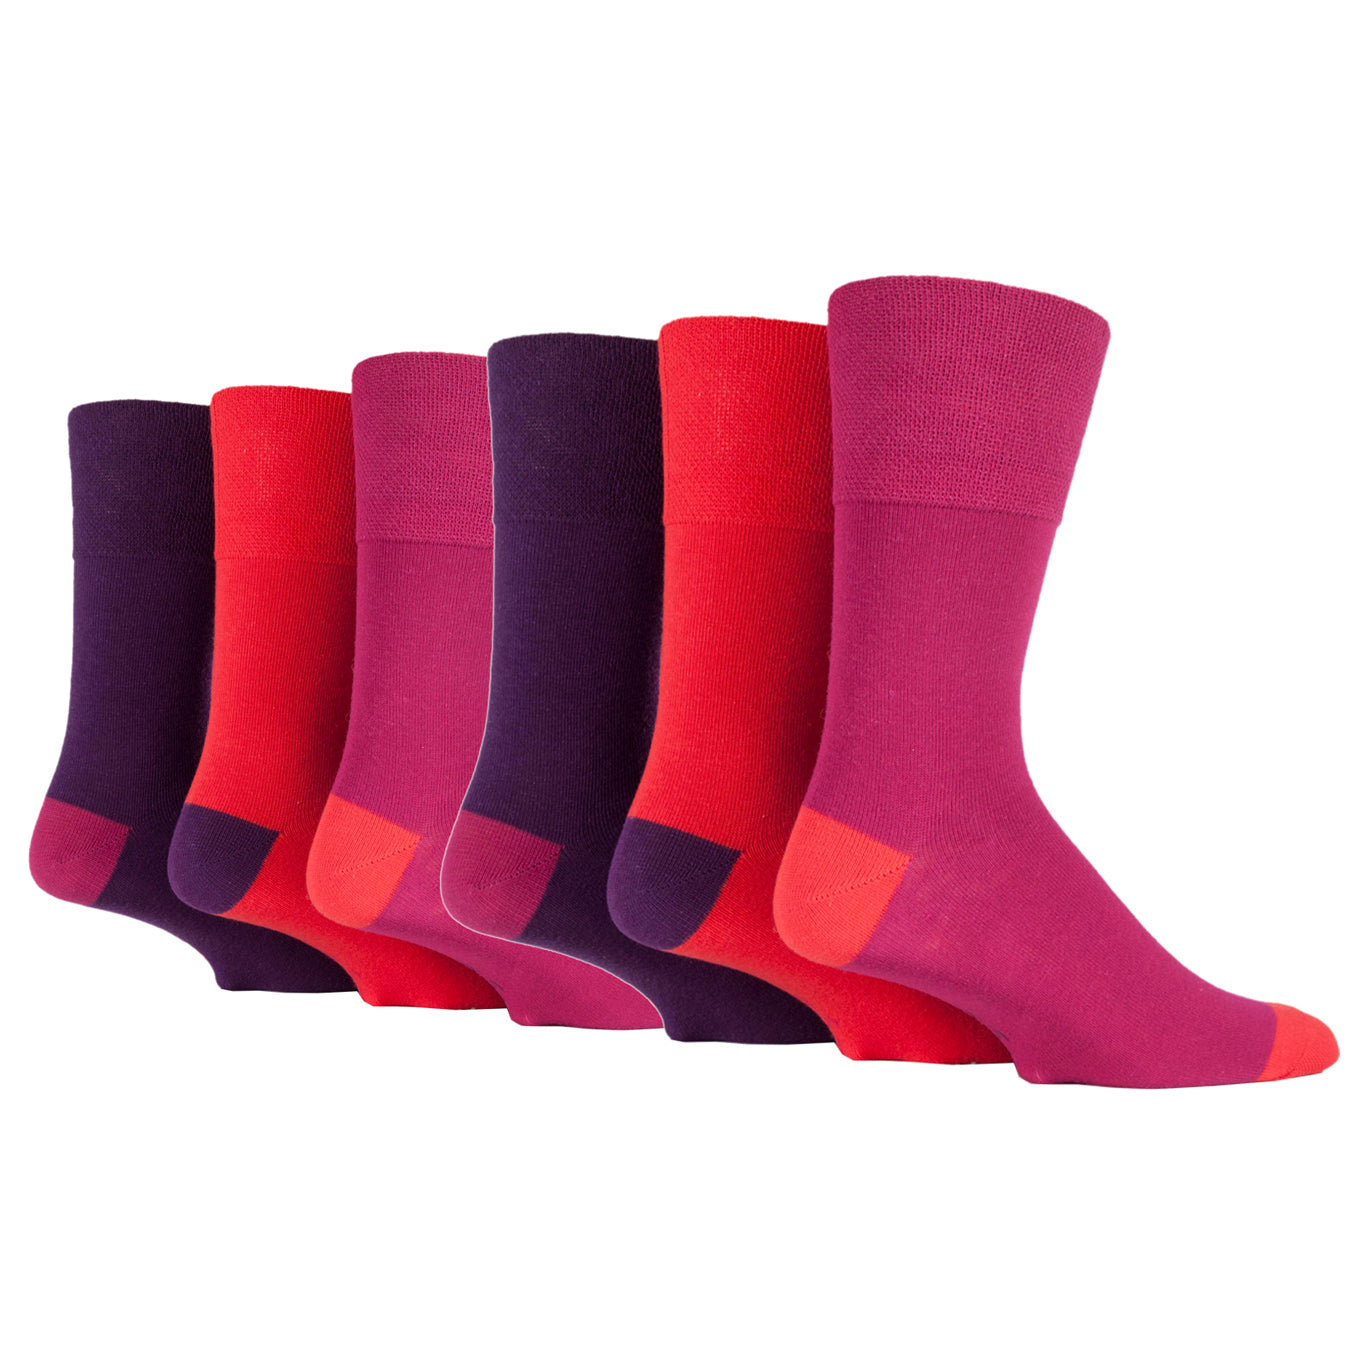 6 Pairs Men's Gentle Grip Cotton Socks Colourburst - Fiery